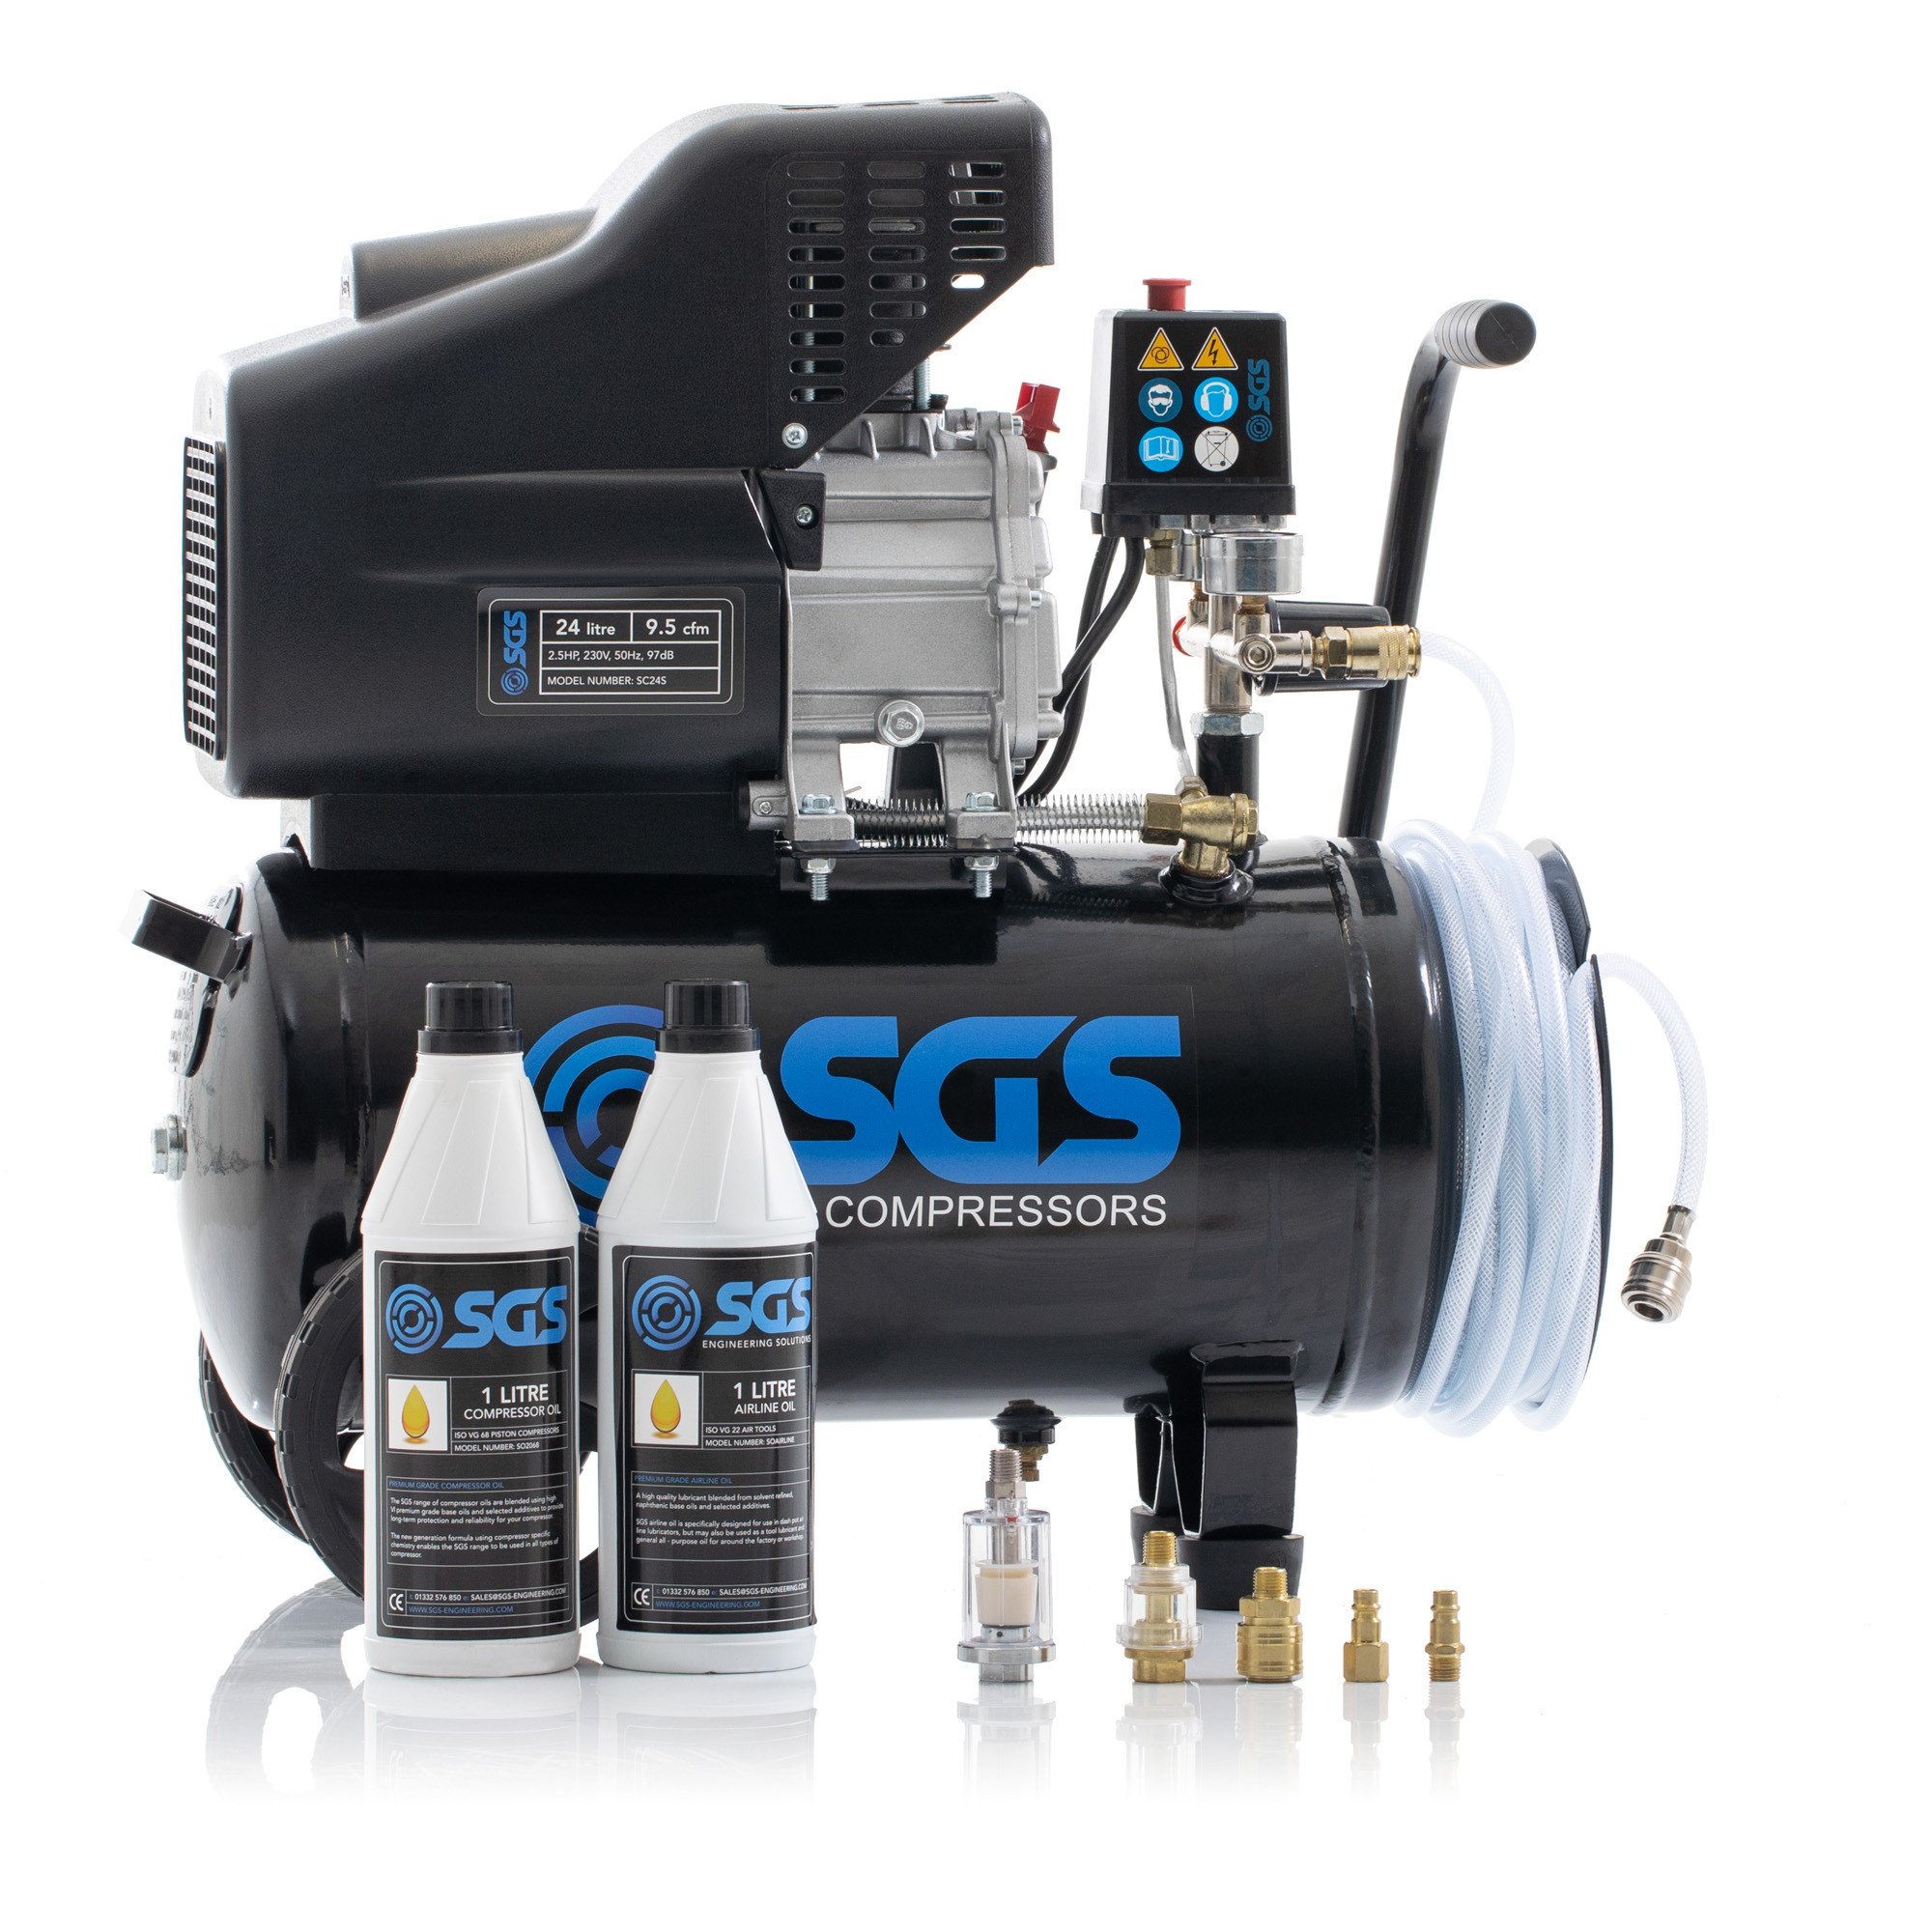 SGS 24升直接驱动空气压缩机，集成软管卷盘和启动器套件- 9.5CFM 2.5HP 24L